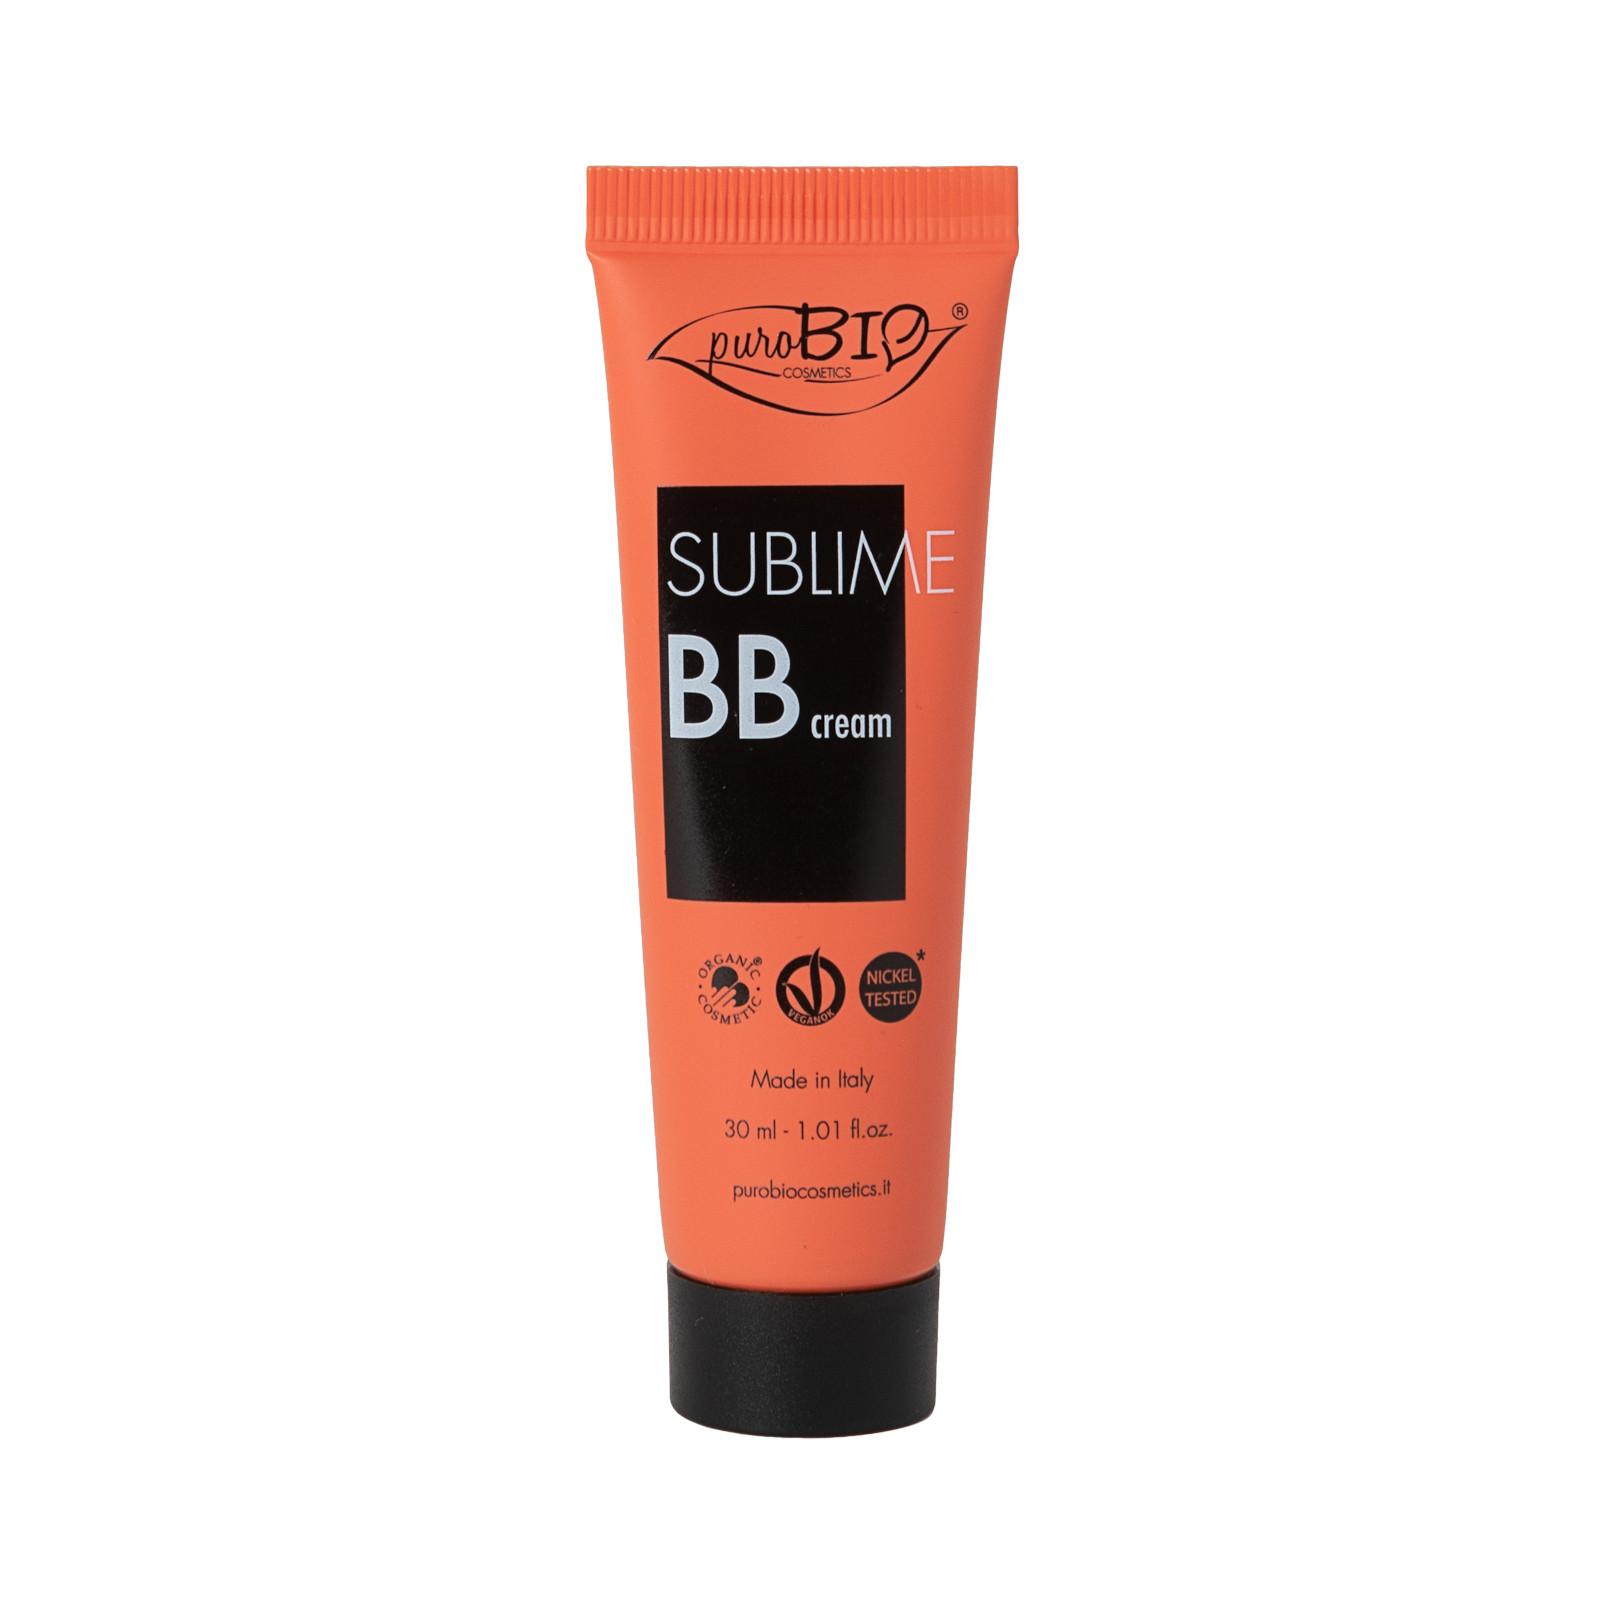 puroBIO cosmetics Sublime BB krém 01 30 ml